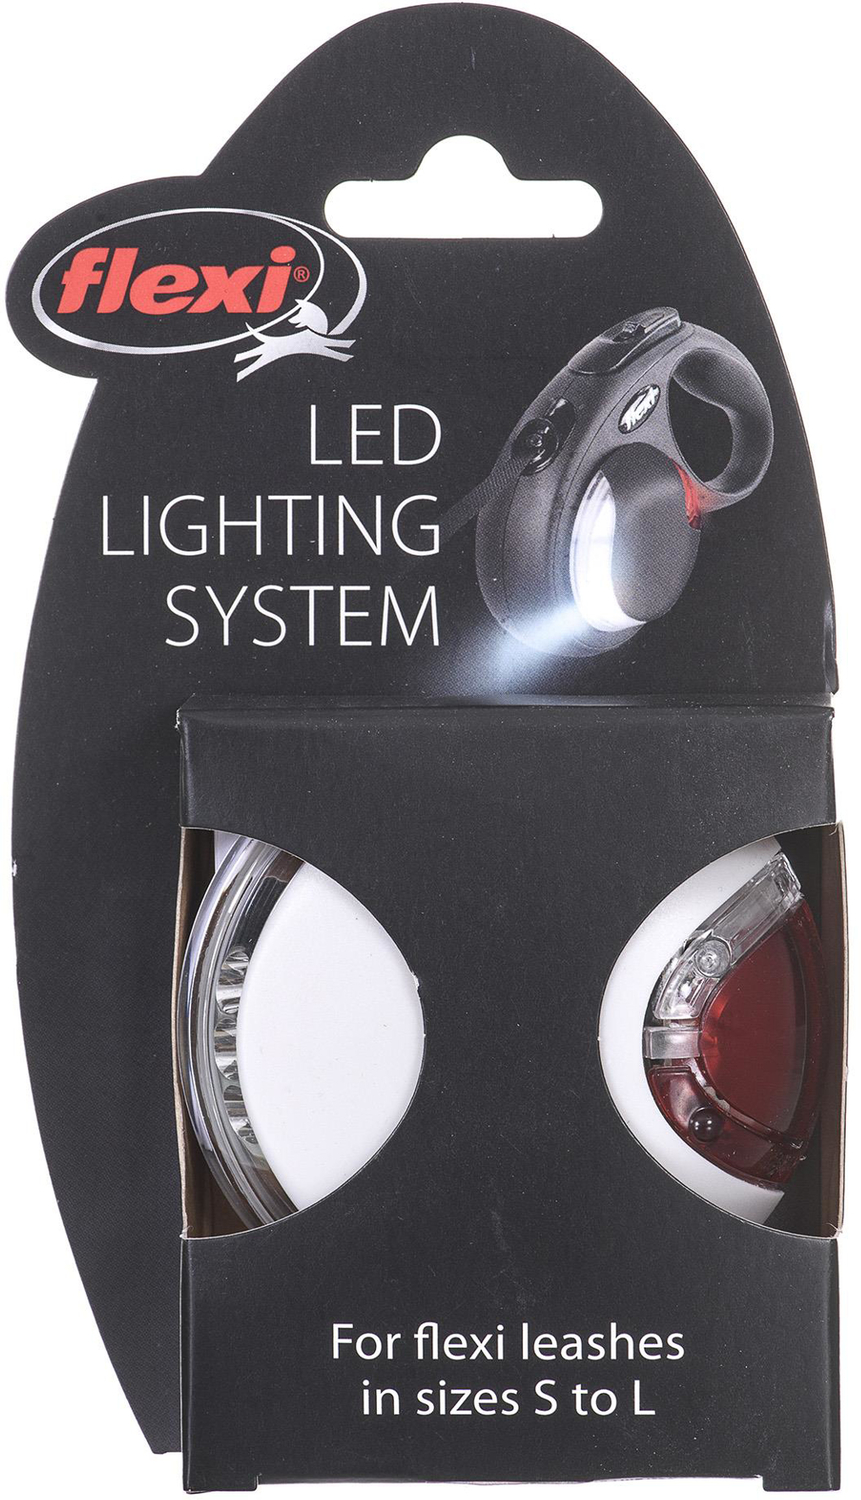 Flexi LED Lighting System - zoom